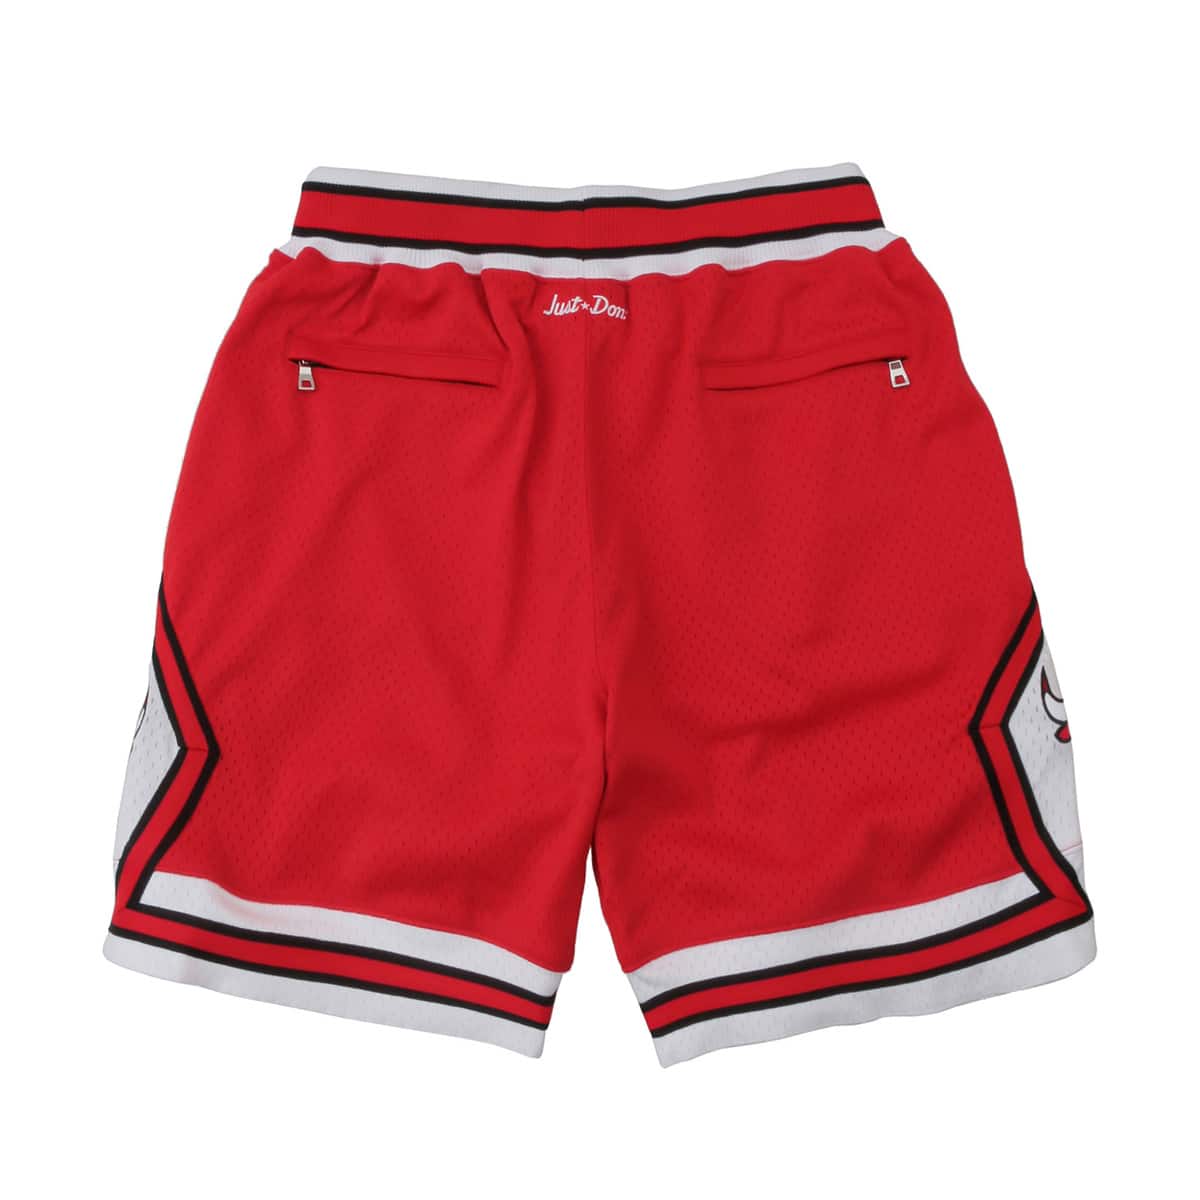 Mitchell  Ness Just Don Swingman Shorts - CHI Bulls RED 20SU-S